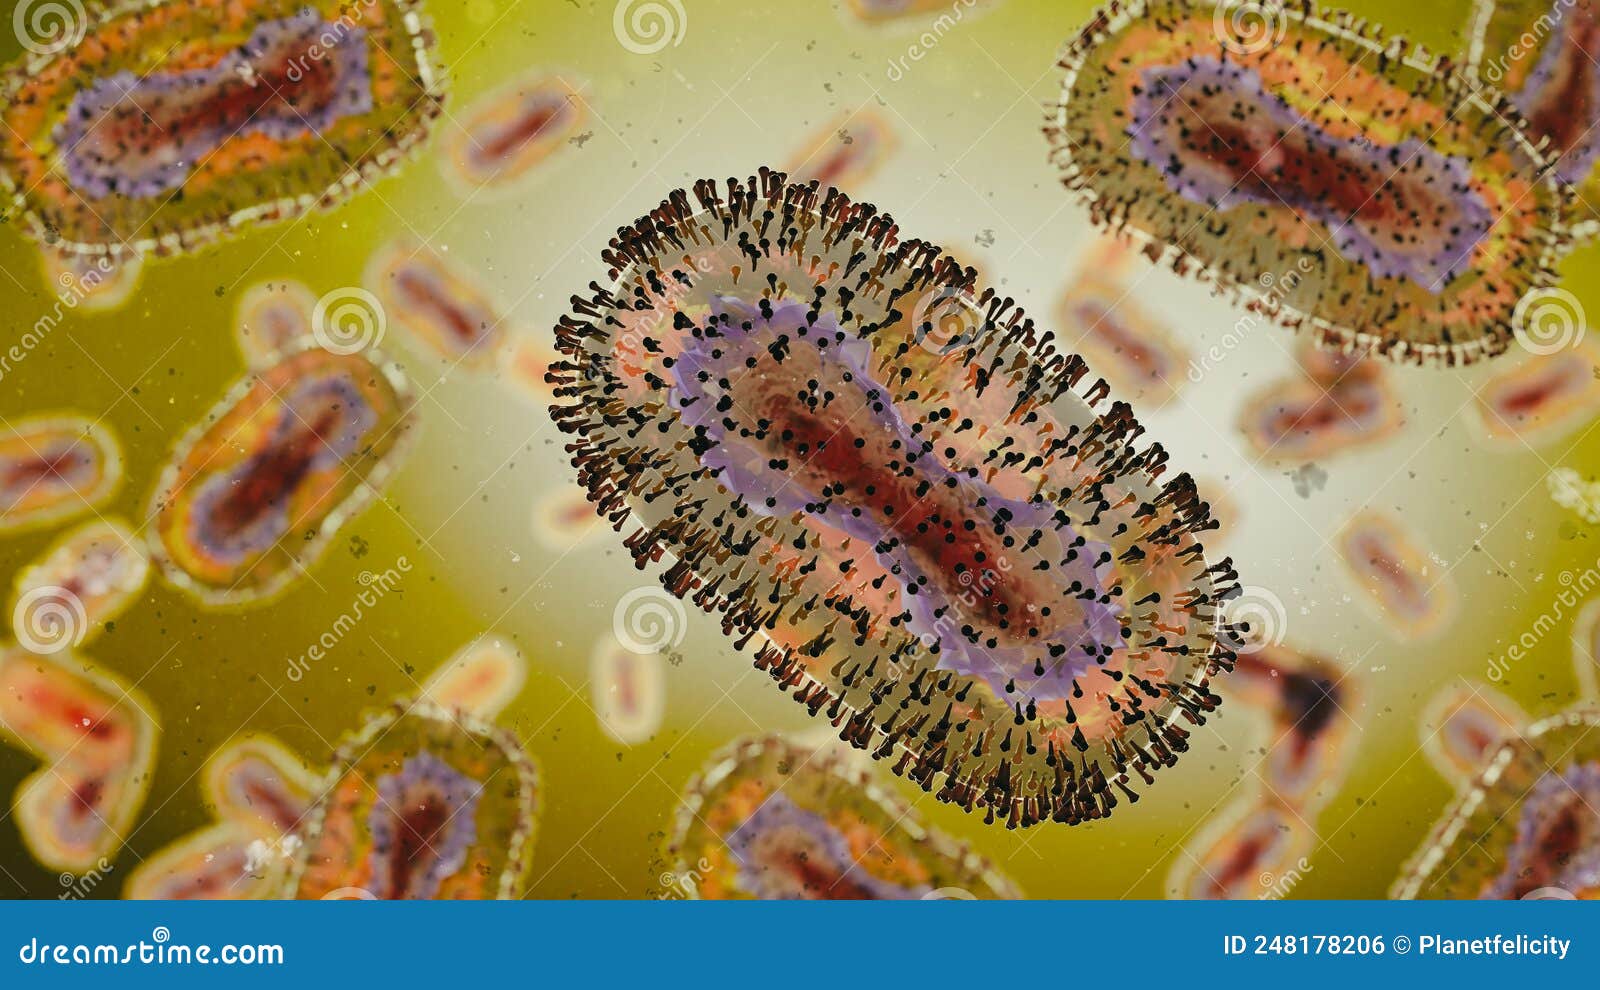 monkeypox virus closeup, contagious pathogen